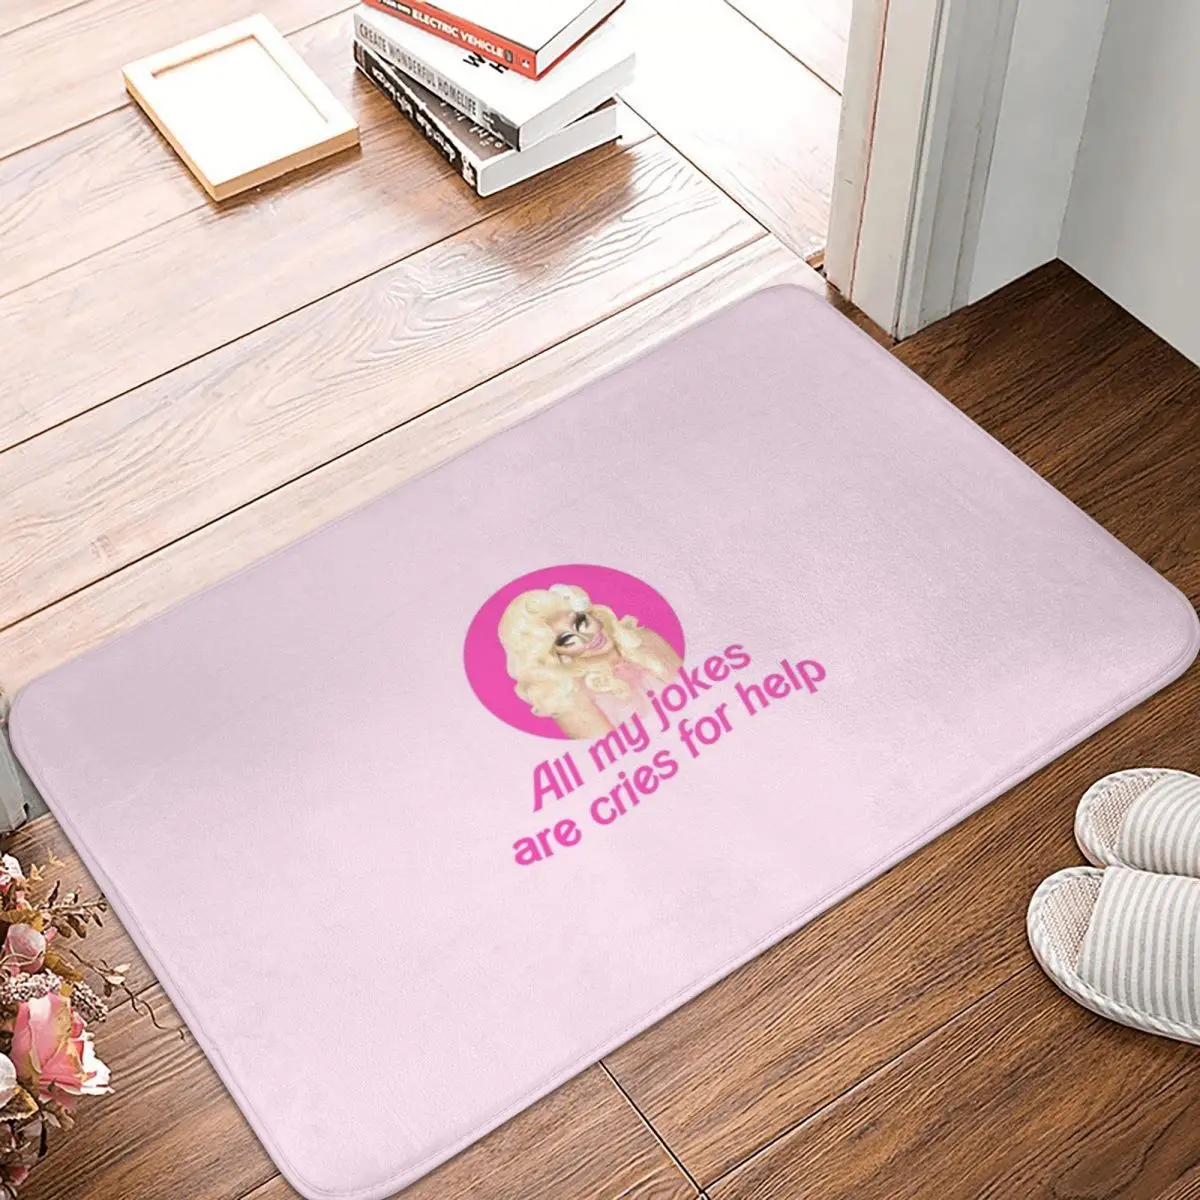 

Trixie Jokes Rupaul's Drag Race Doormat Carpet Mat Rug Polyester PVC Non-Slip Floor Decor Bath Bathroom Kitchen Bedroom 40x60